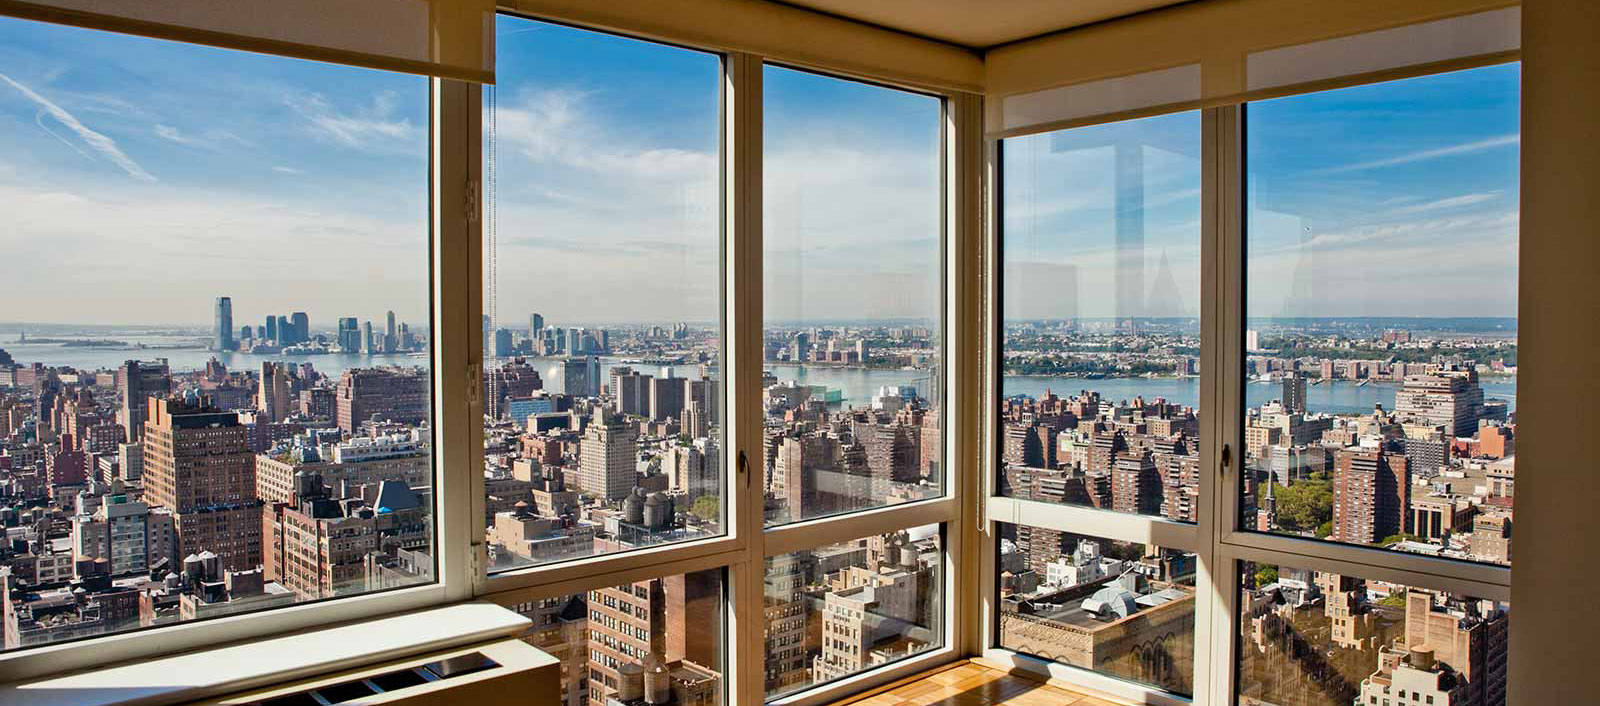 ChanelBabeBlog: Inspiration Board - New York City Apartaments